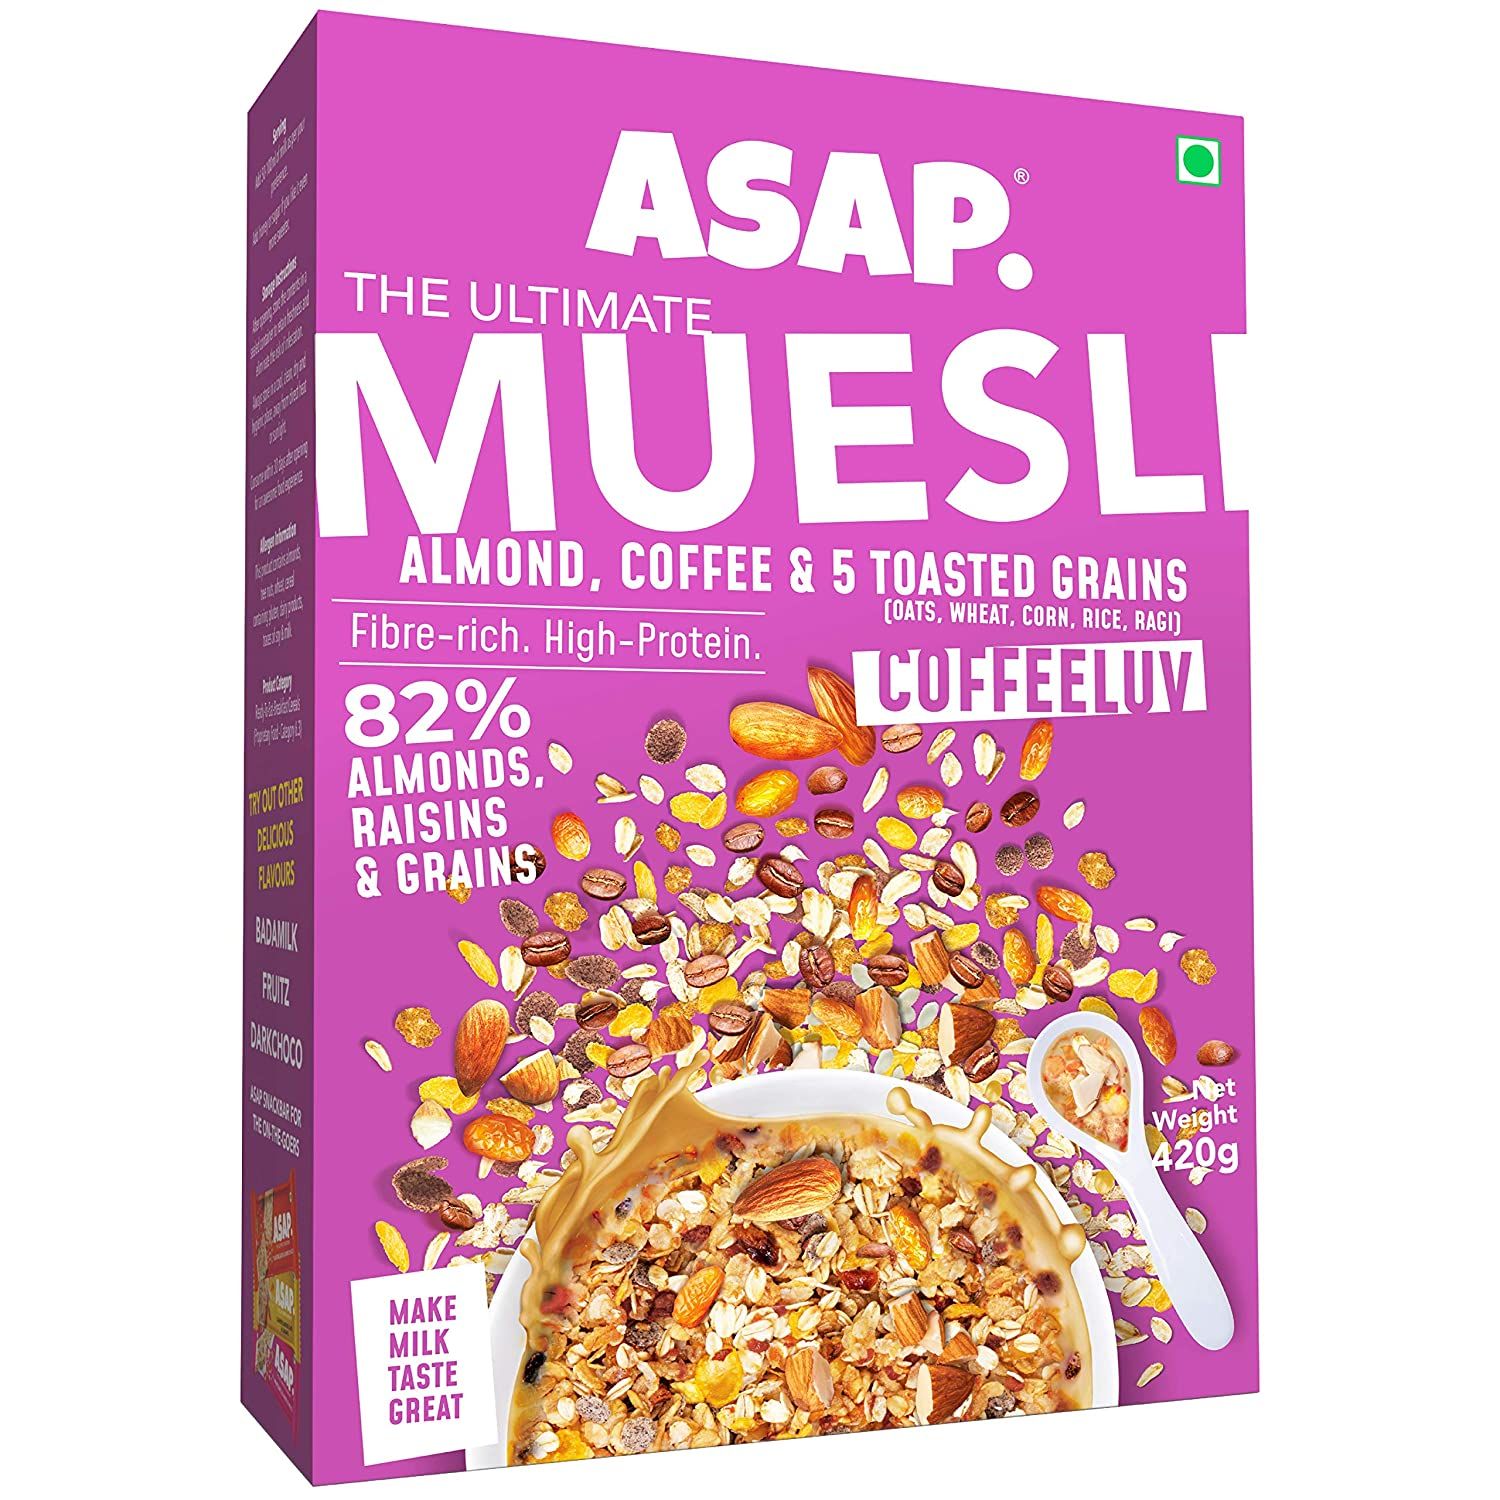 ASAP Ultimate Muesli Almond Coffee 5 Toeasted Grains Coffeeluv Image